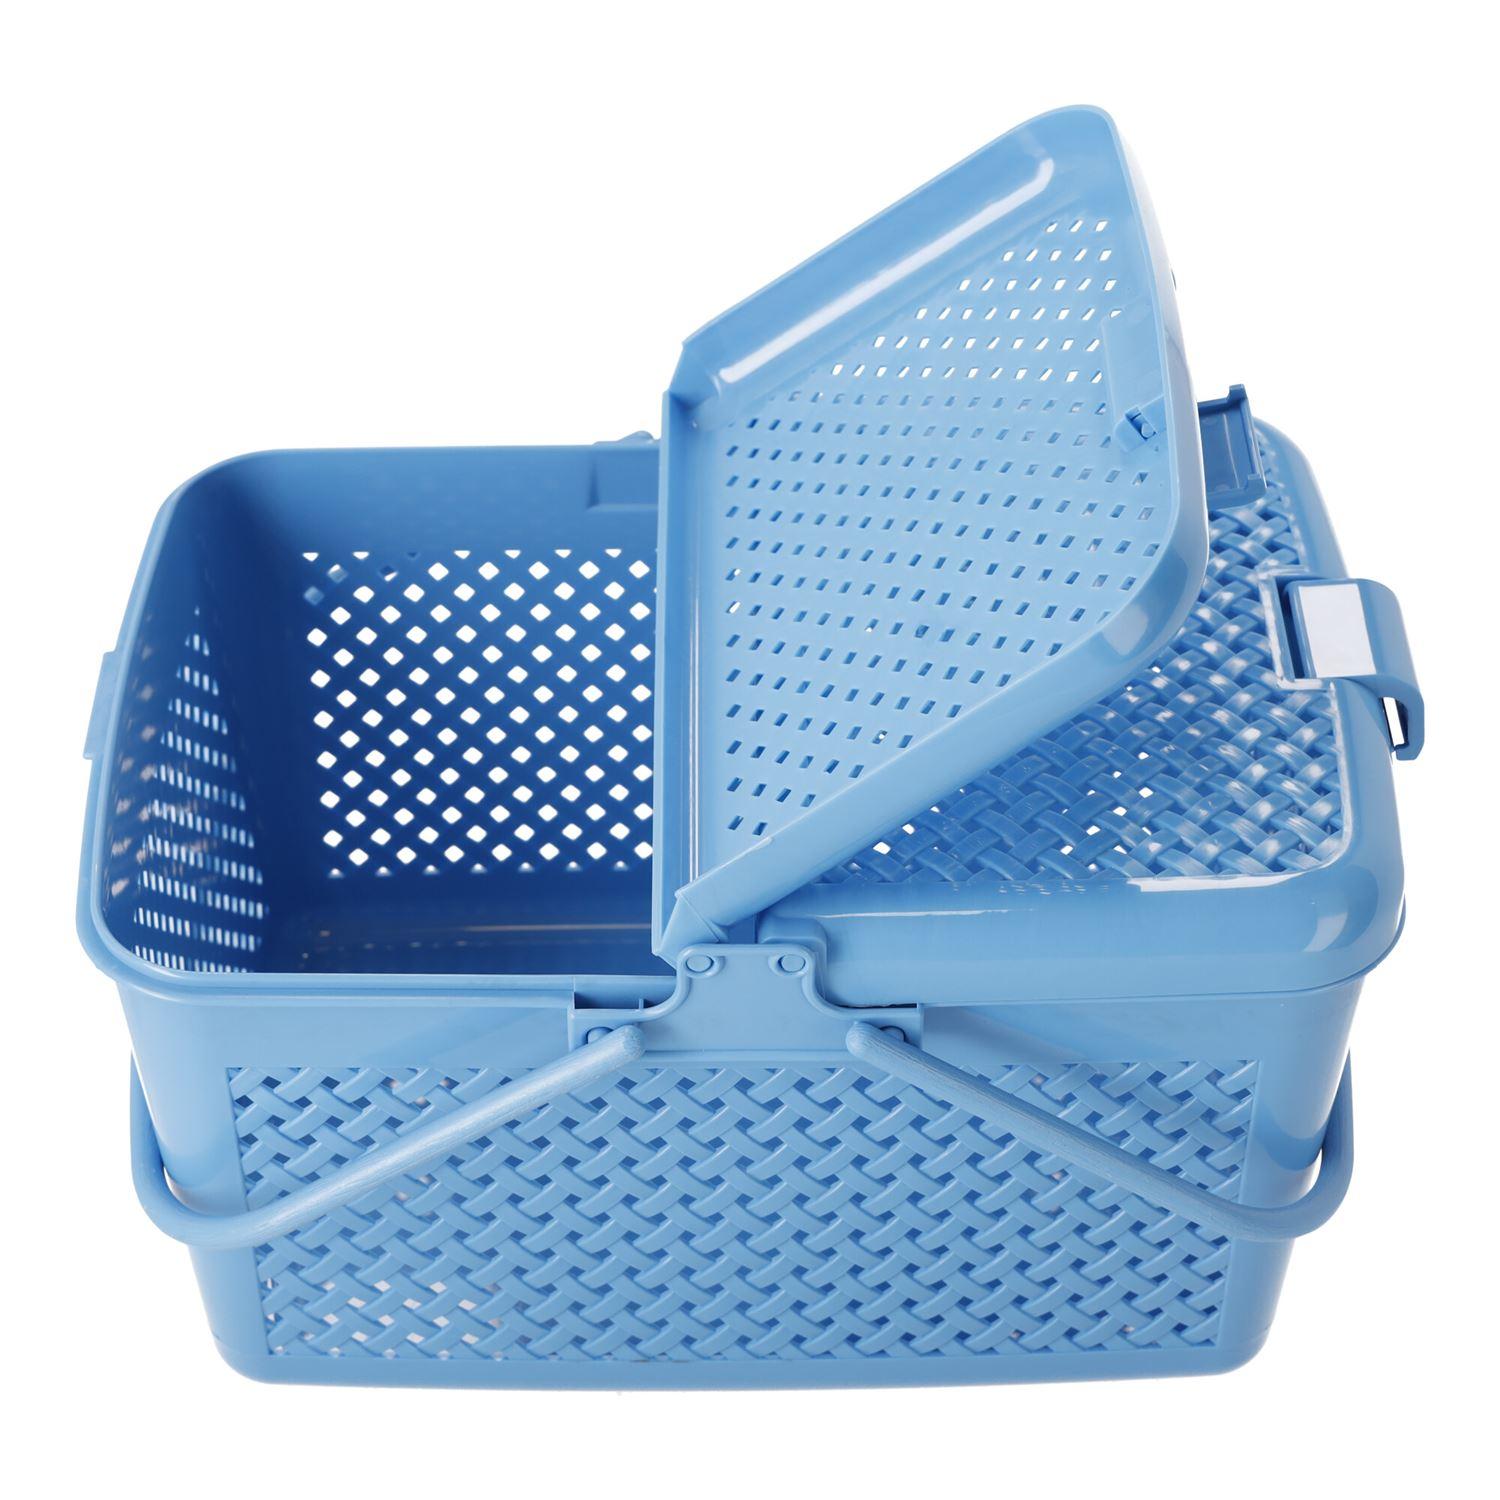 Rectangular picnic basket lockable blue, POLISH PRODUCT